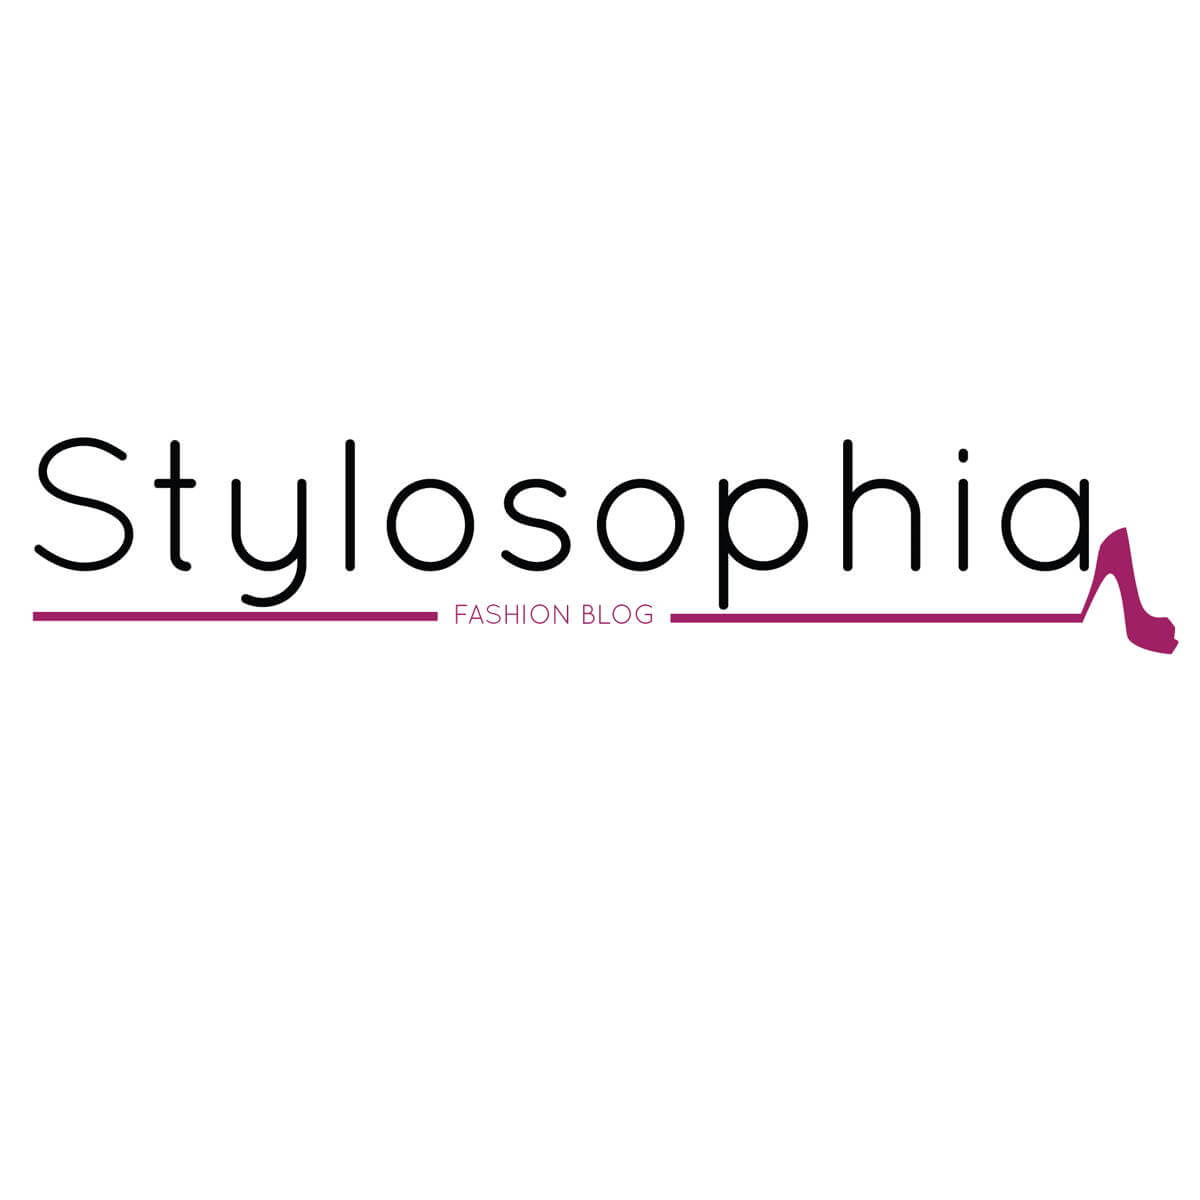 Stylosophia Fashion Blog Italia